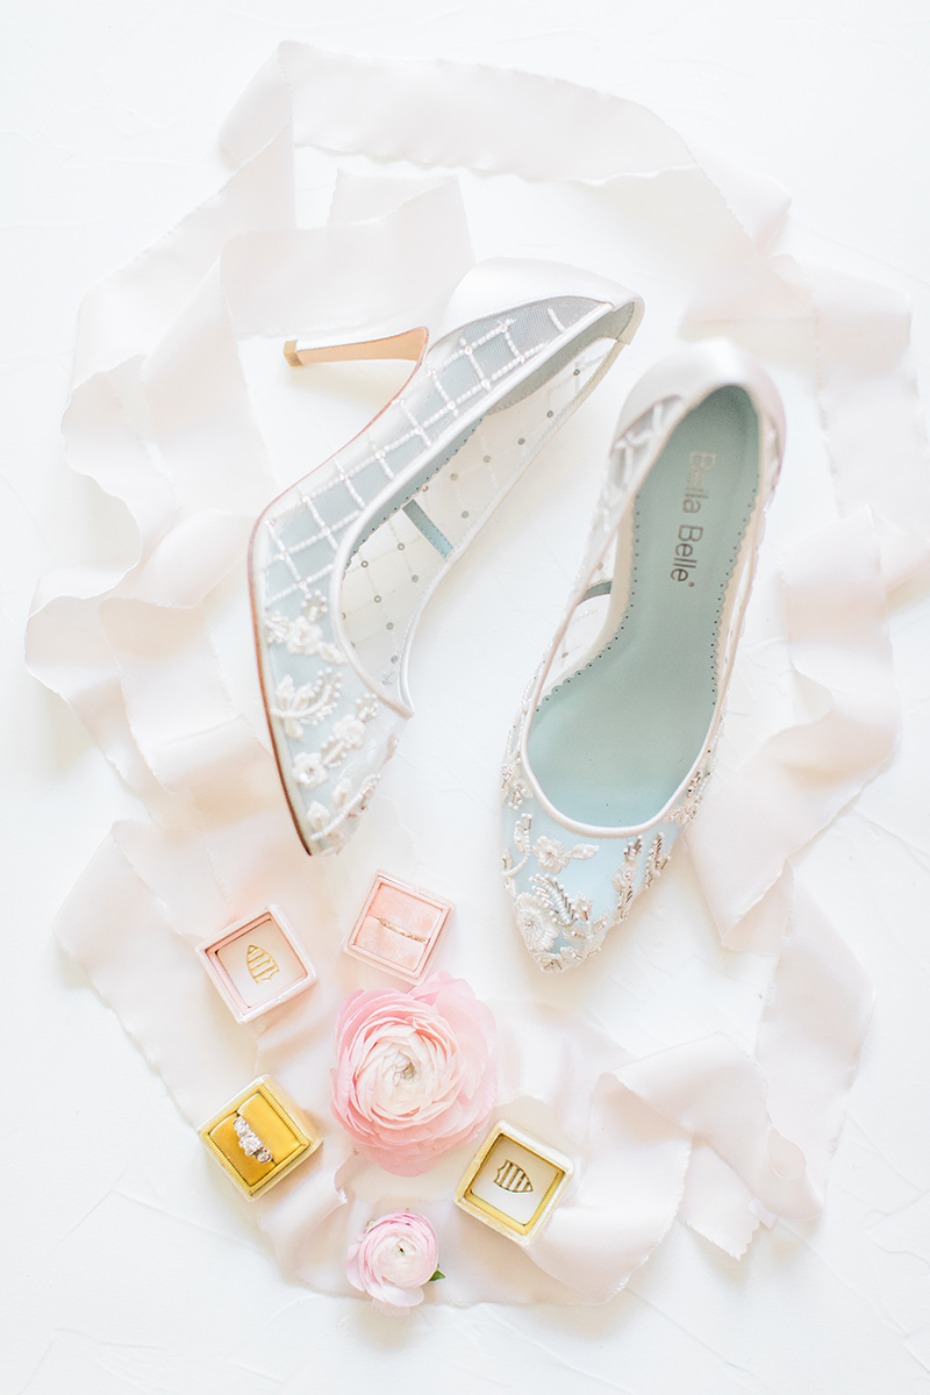 Bella Belle wedding shoes